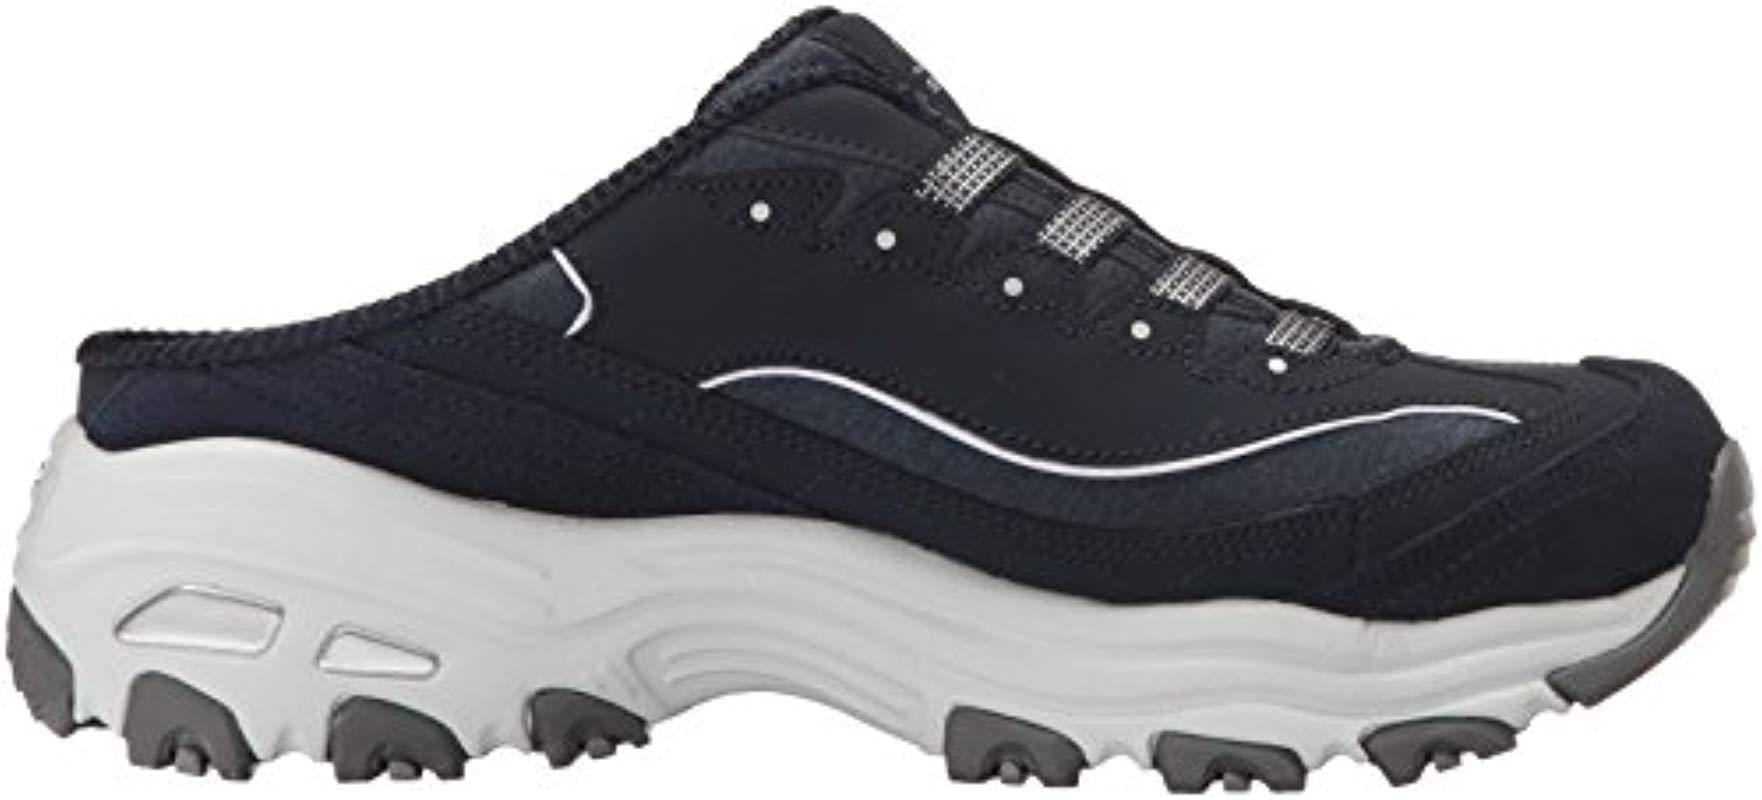 Skechers Synthetic Sport D'lites Slip-on Mule Sneaker in Navy White (Blue)  - Save 69% | Lyst UK